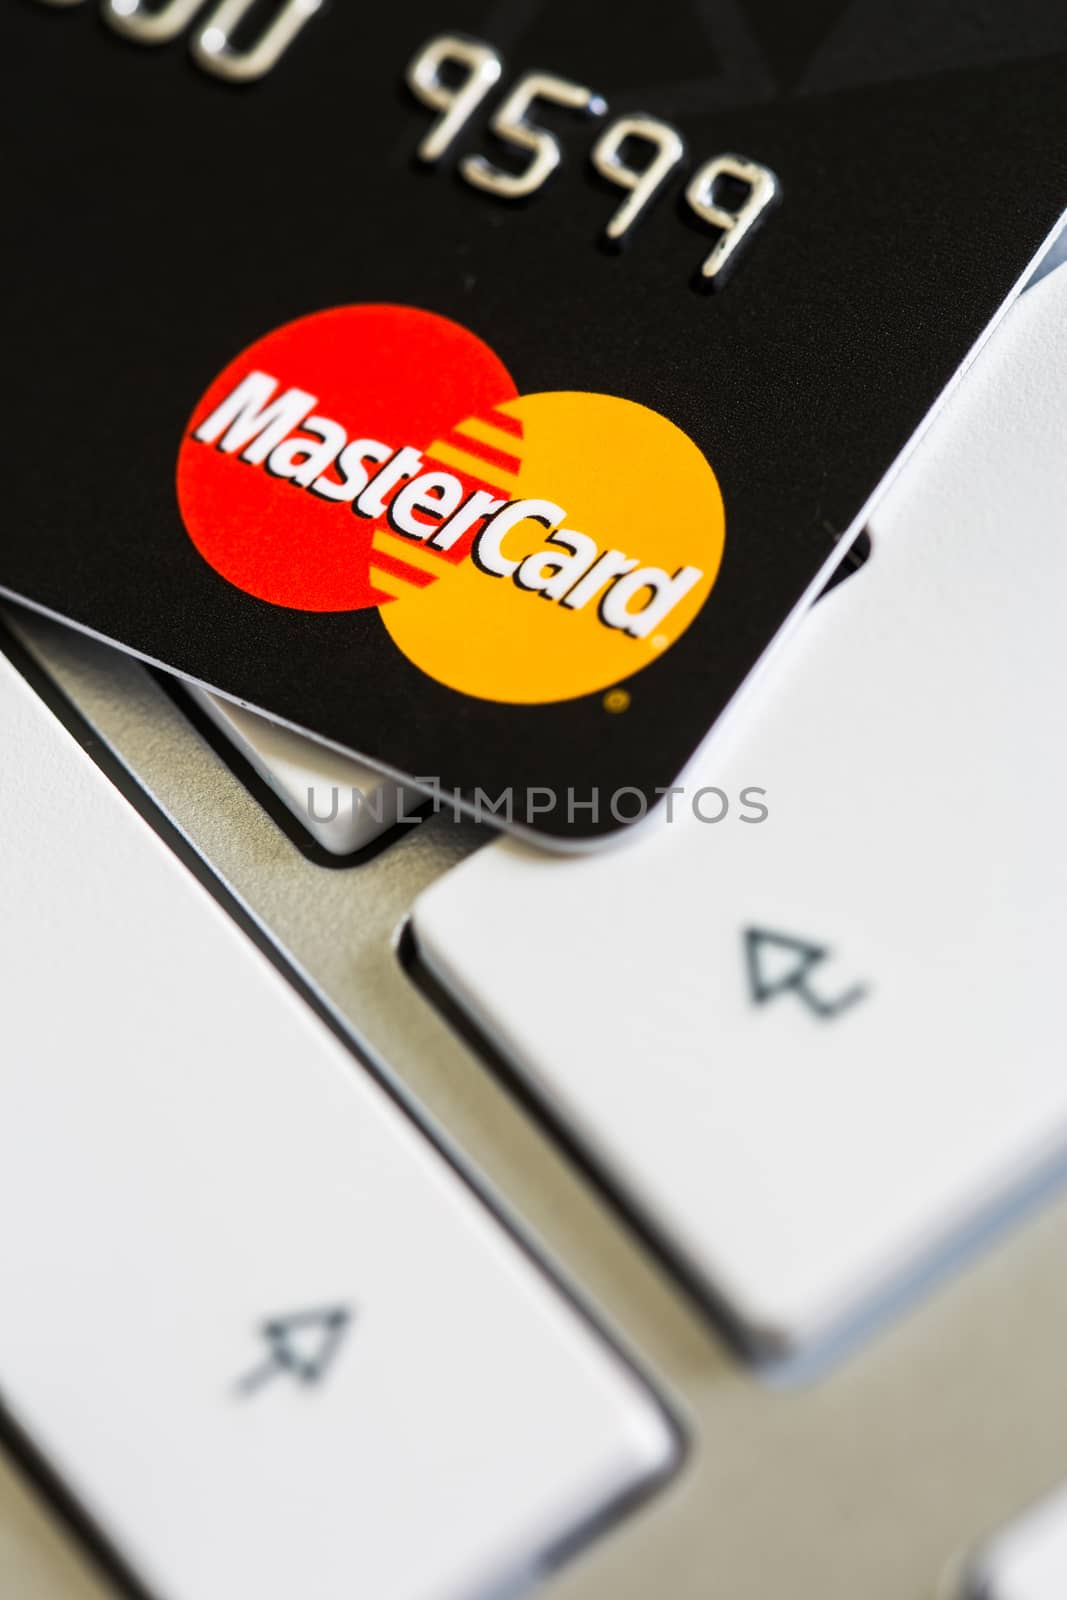 Benon, France - Feb 08, 2017: MasterCard credit card on keyboard by pixinoo